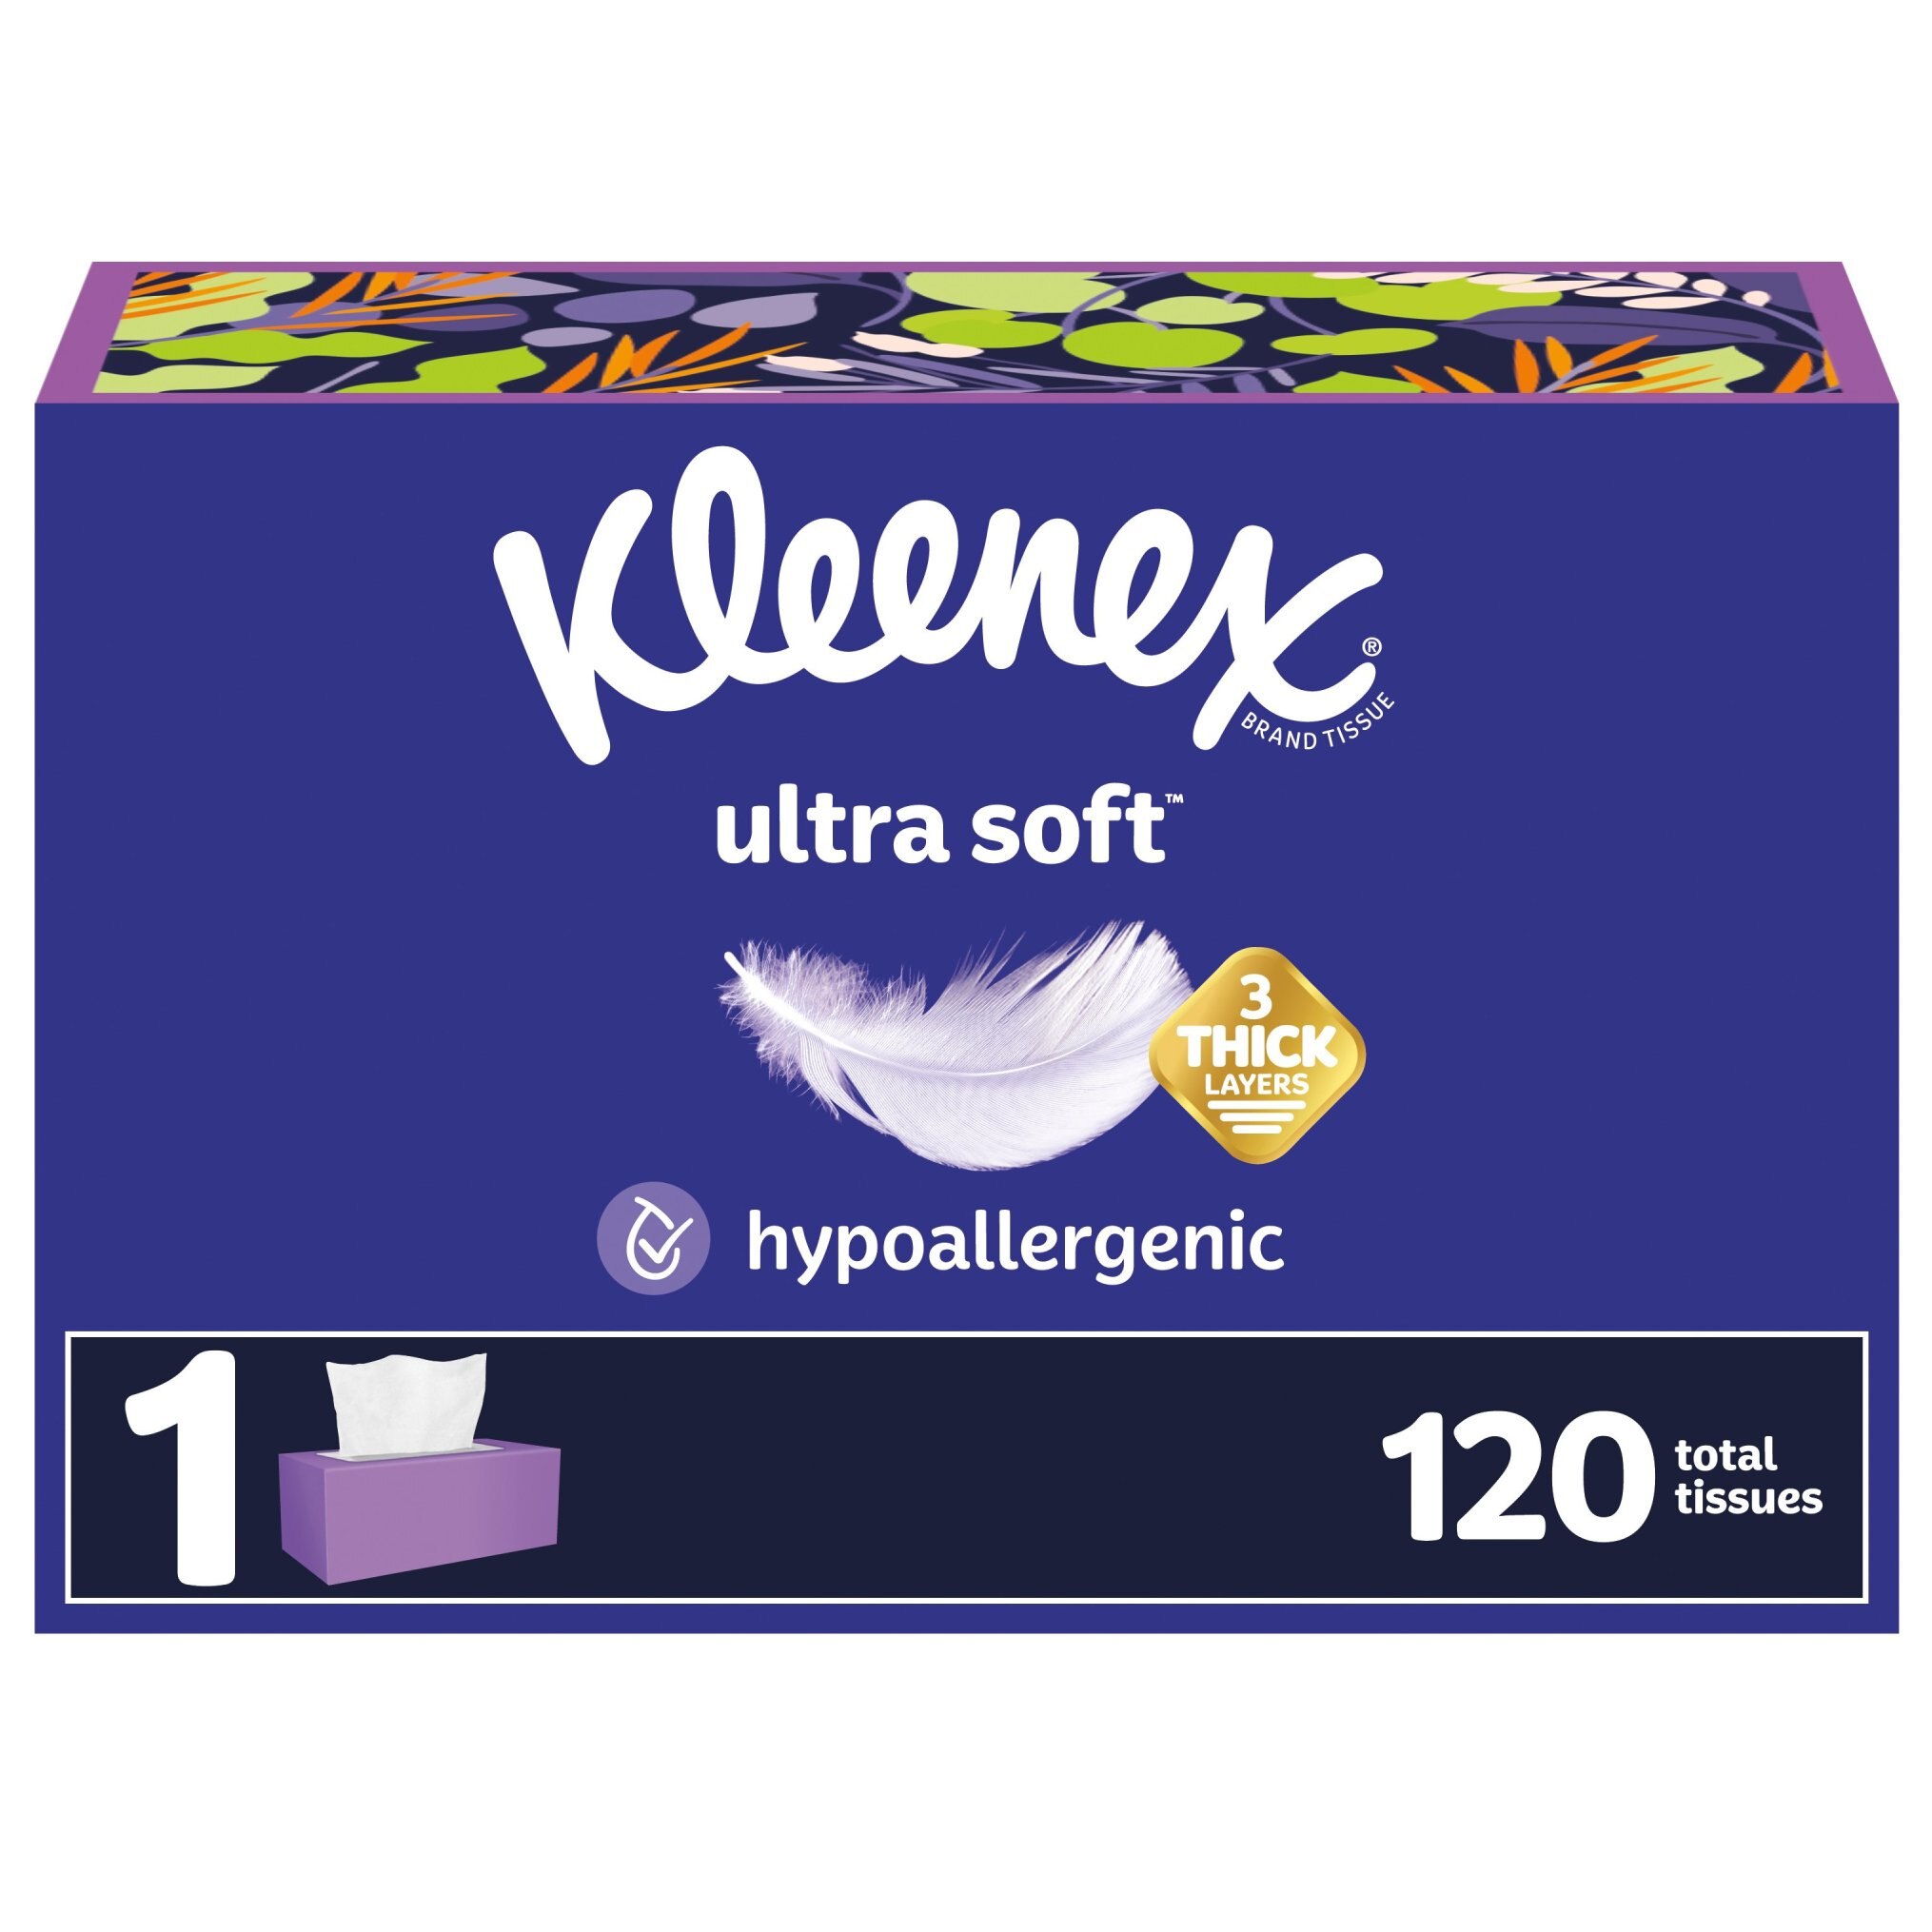 Kleenex Ultra Soft Facial Tissues, 1 Flat Box, 120 Tissues per Box, 3-Ply